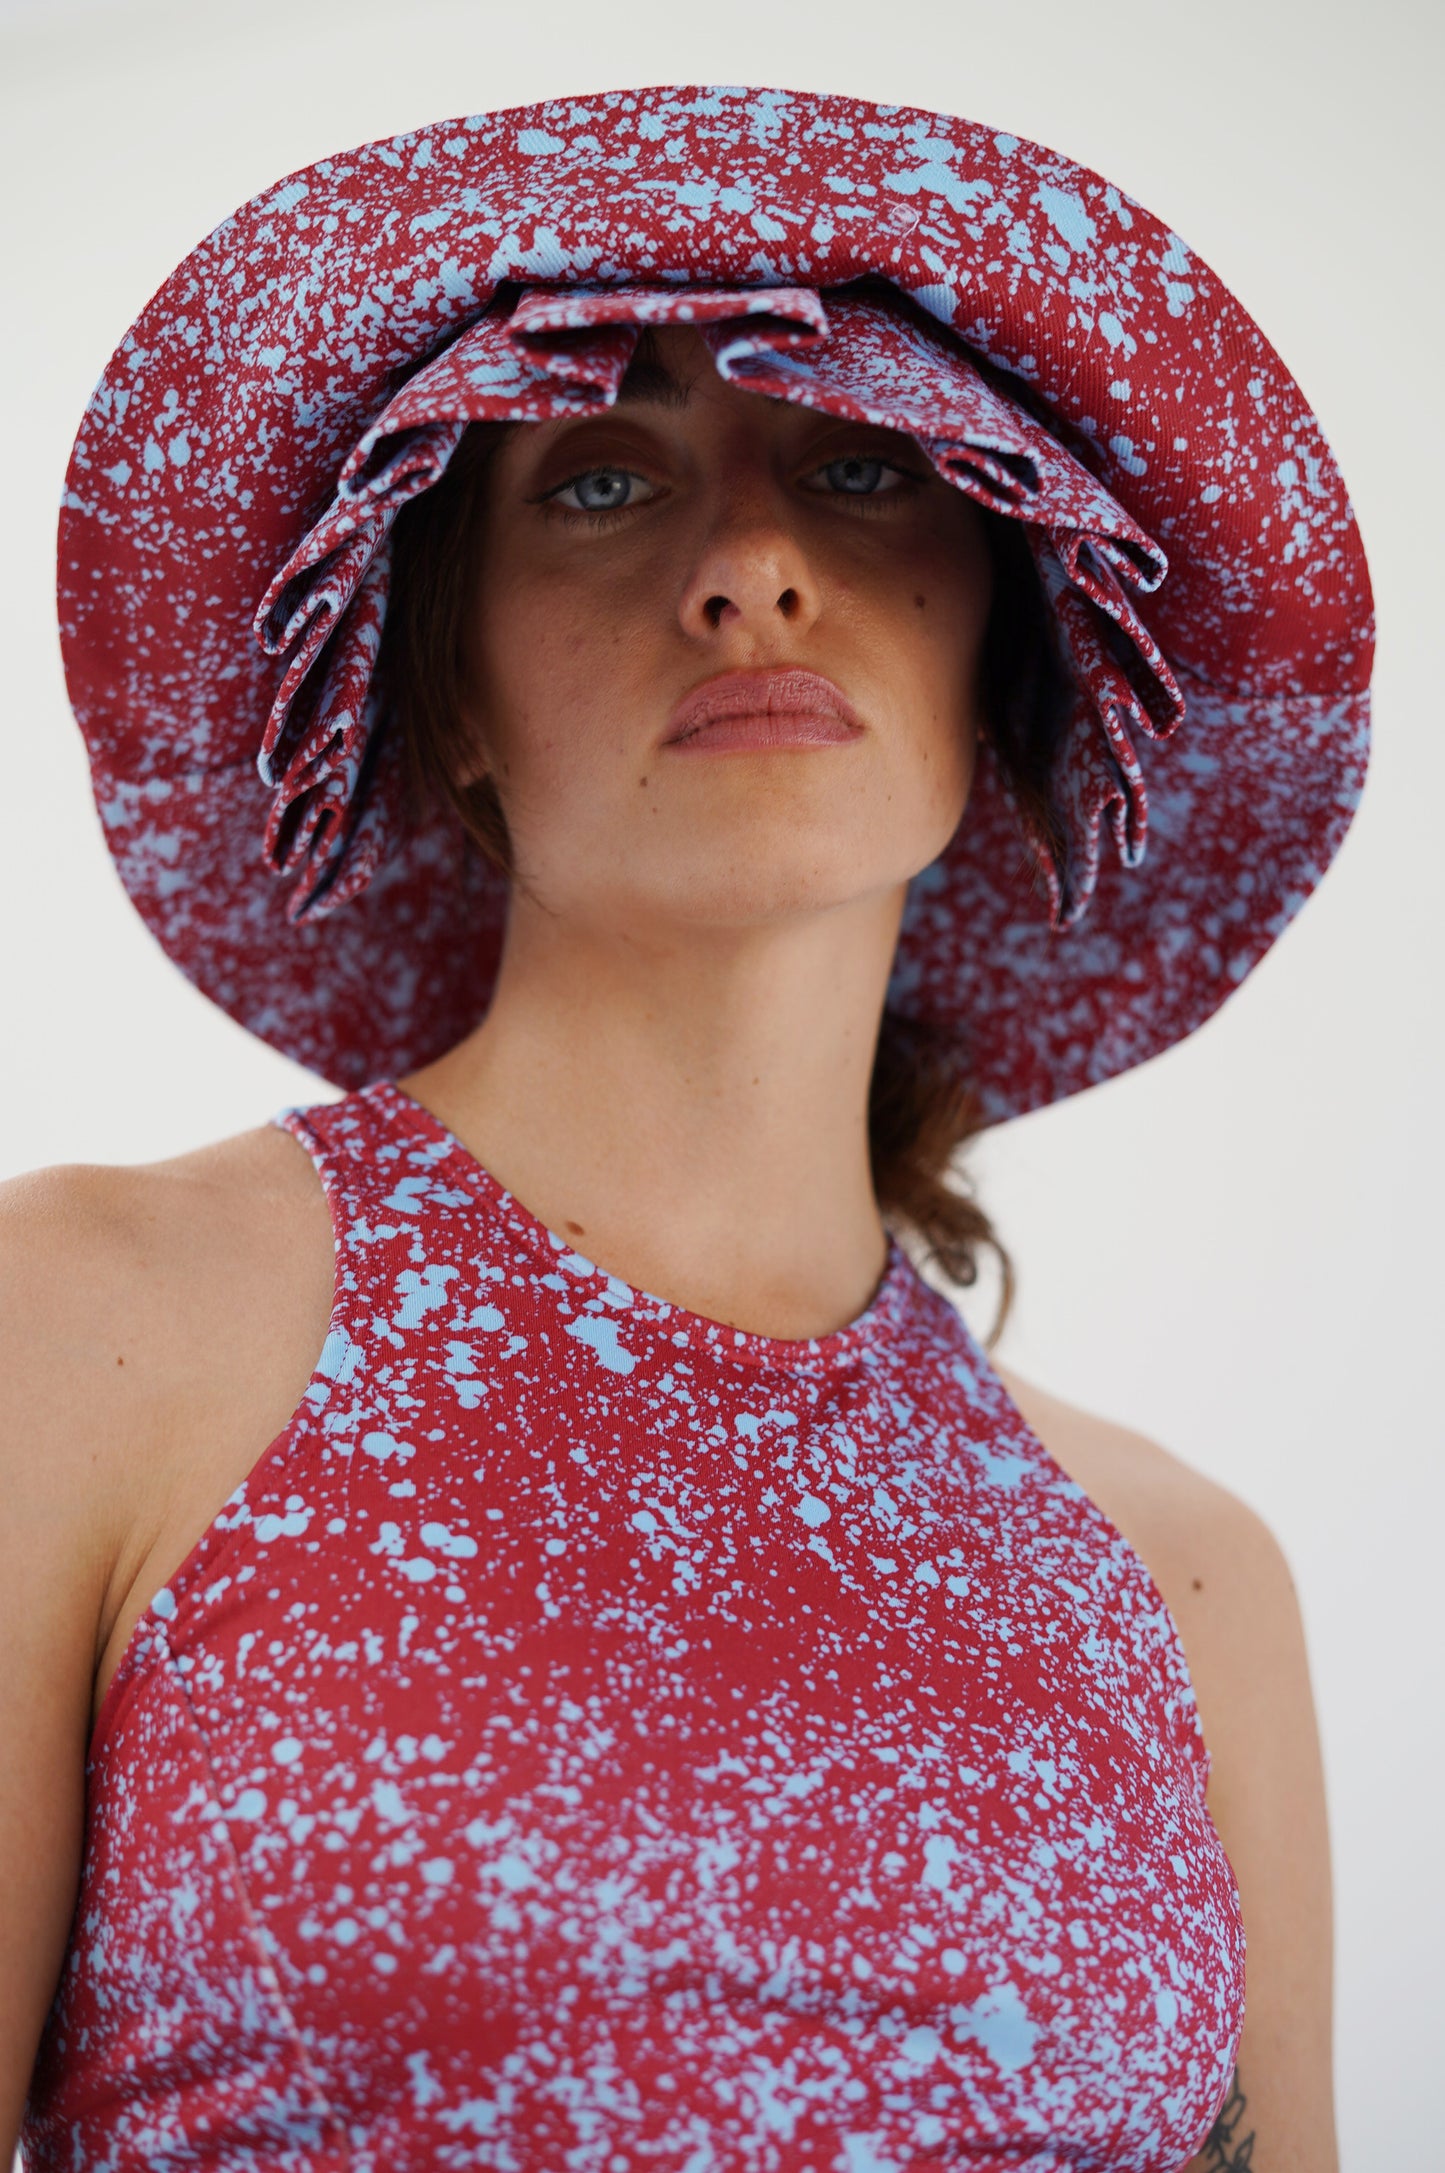 Beklina Layered Pleat Hat Splatter Blue/Red